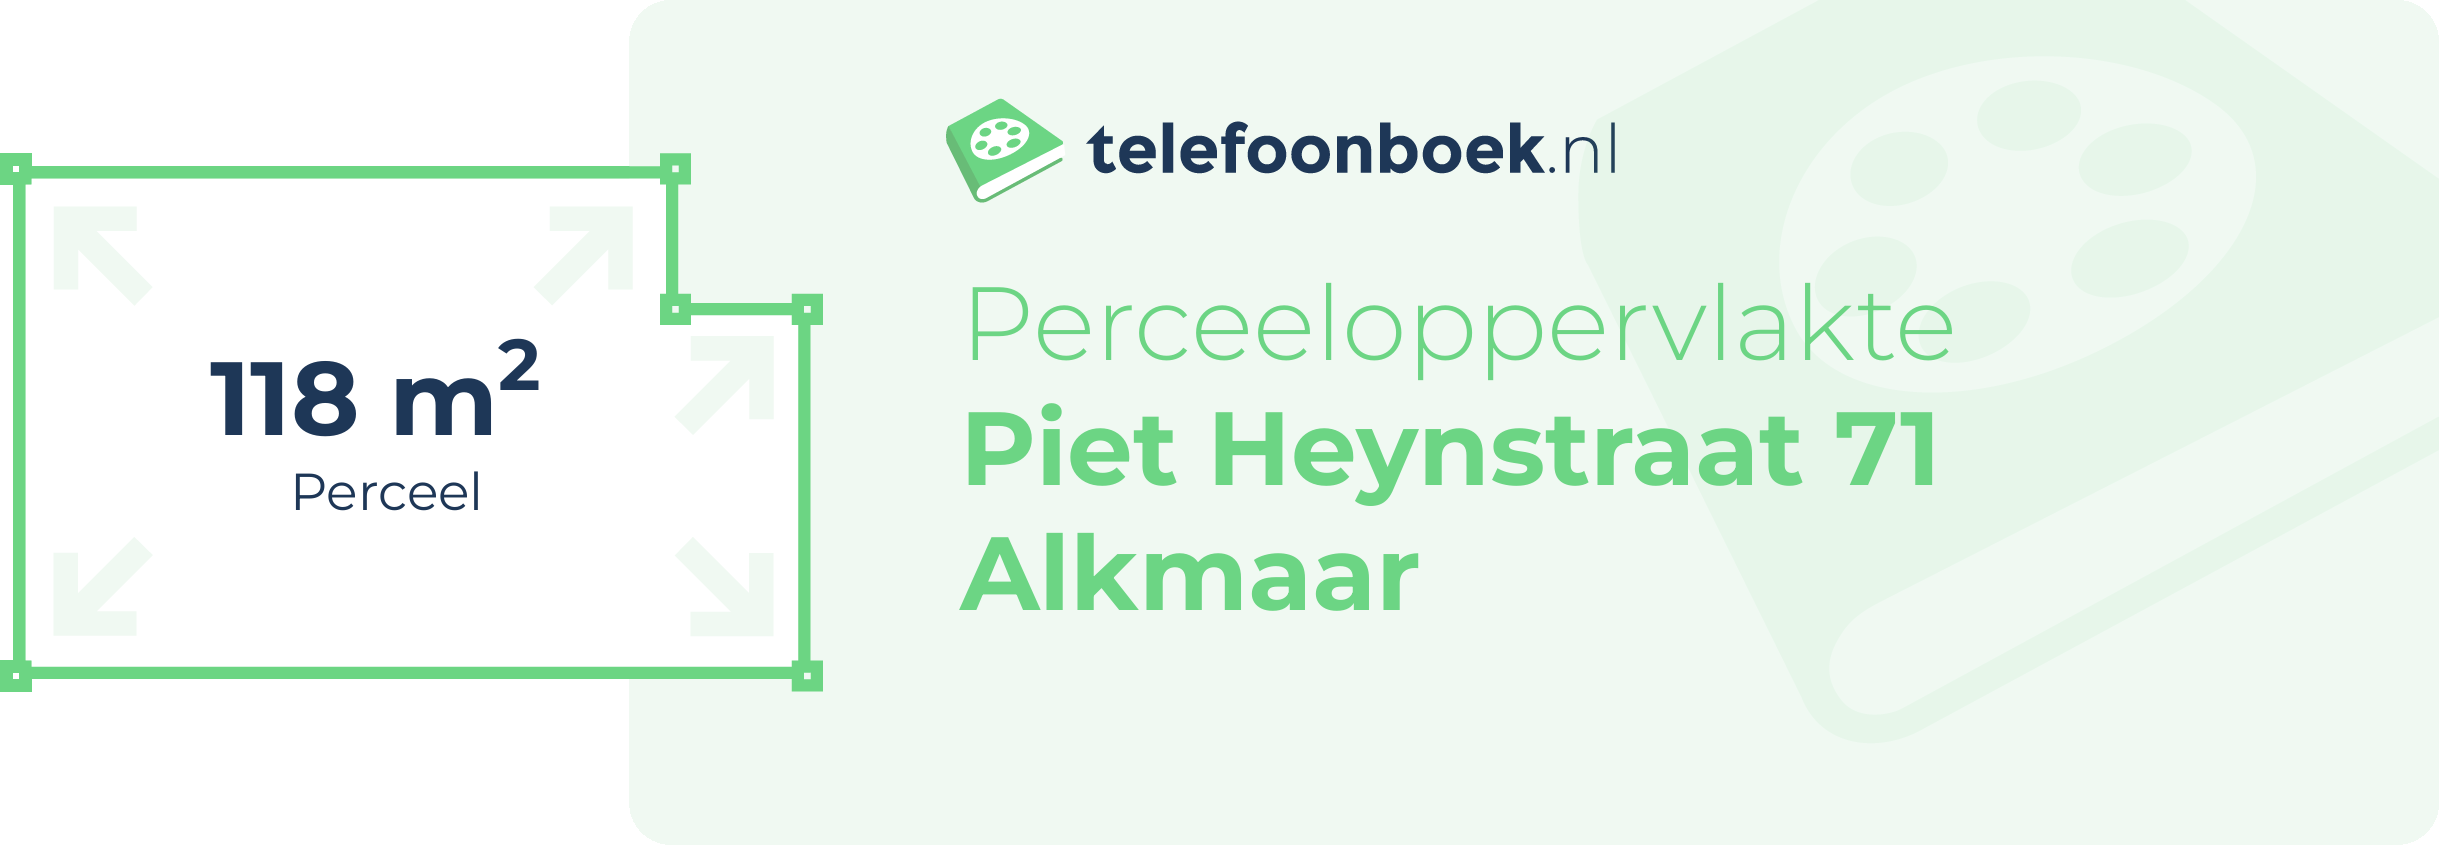 Perceeloppervlakte Piet Heynstraat 71 Alkmaar